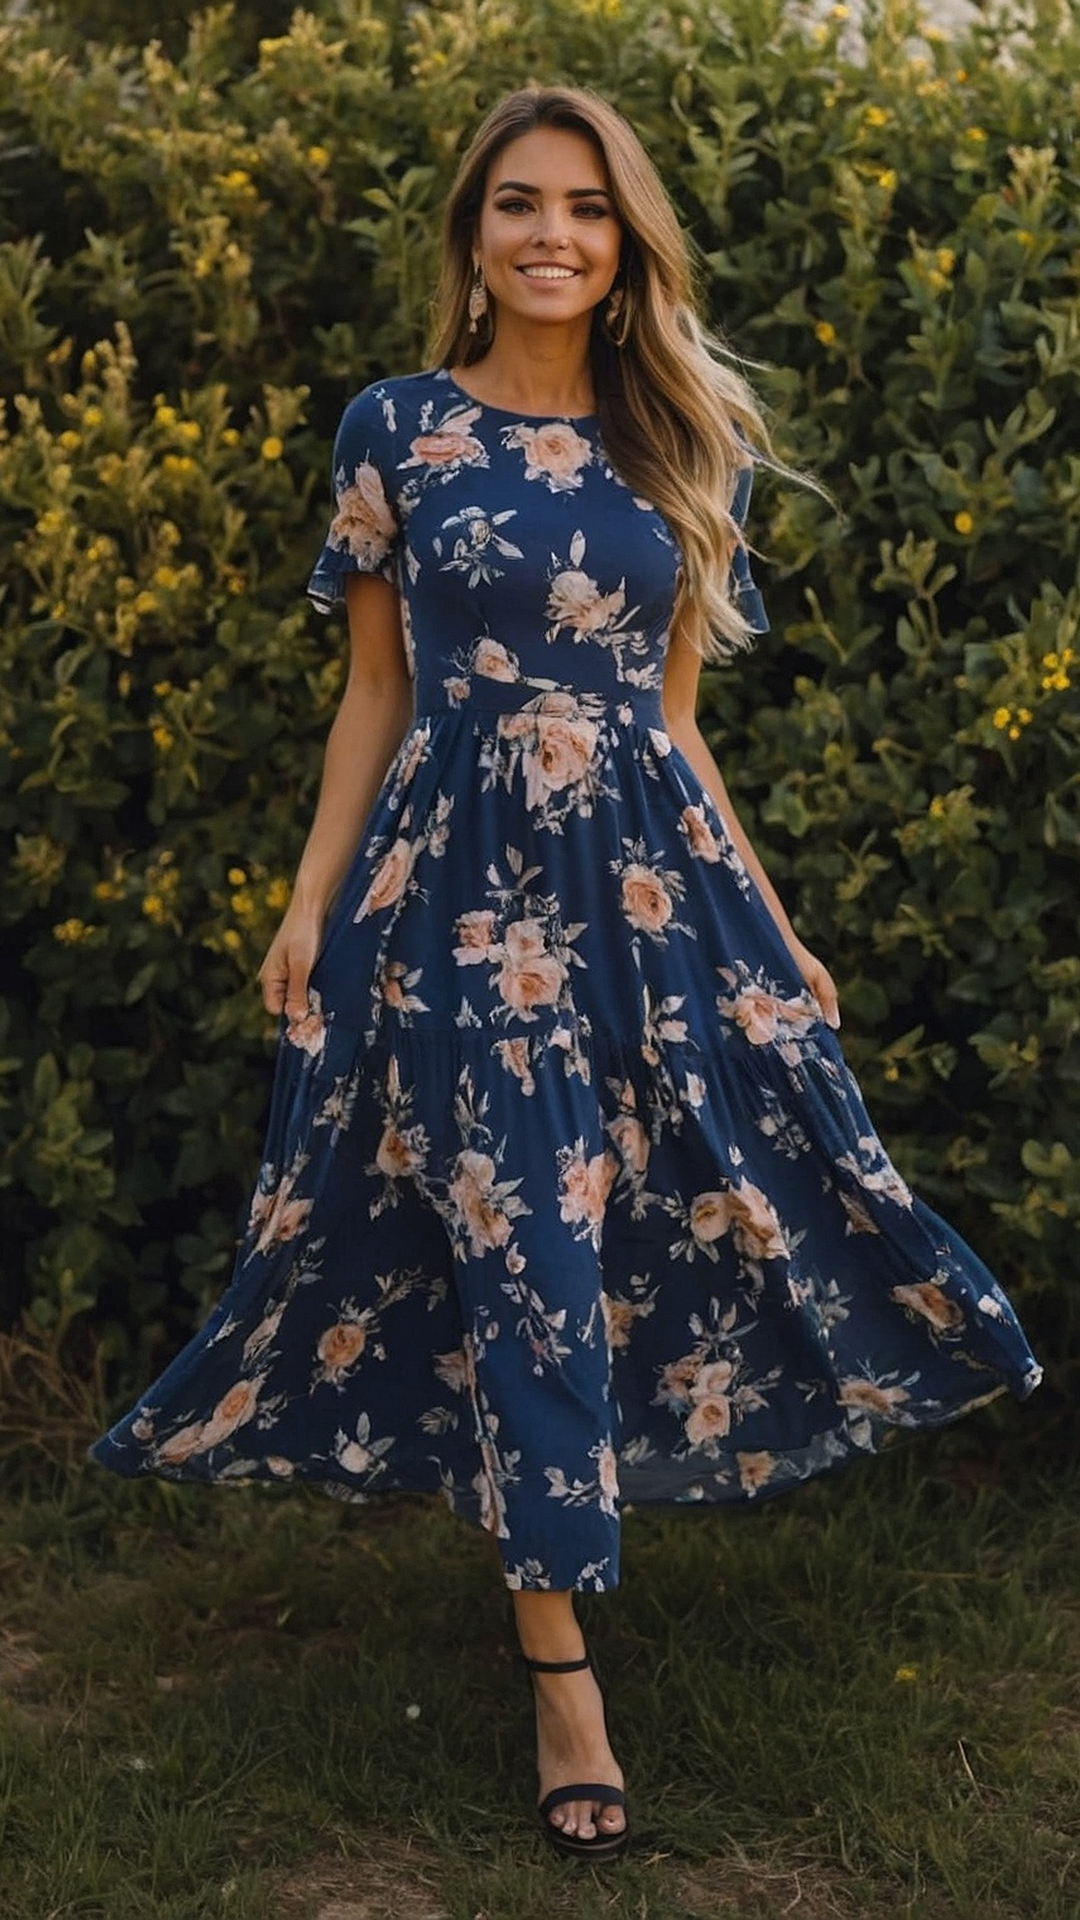 Floral Flair: Maxi Dress Ideas Blooming